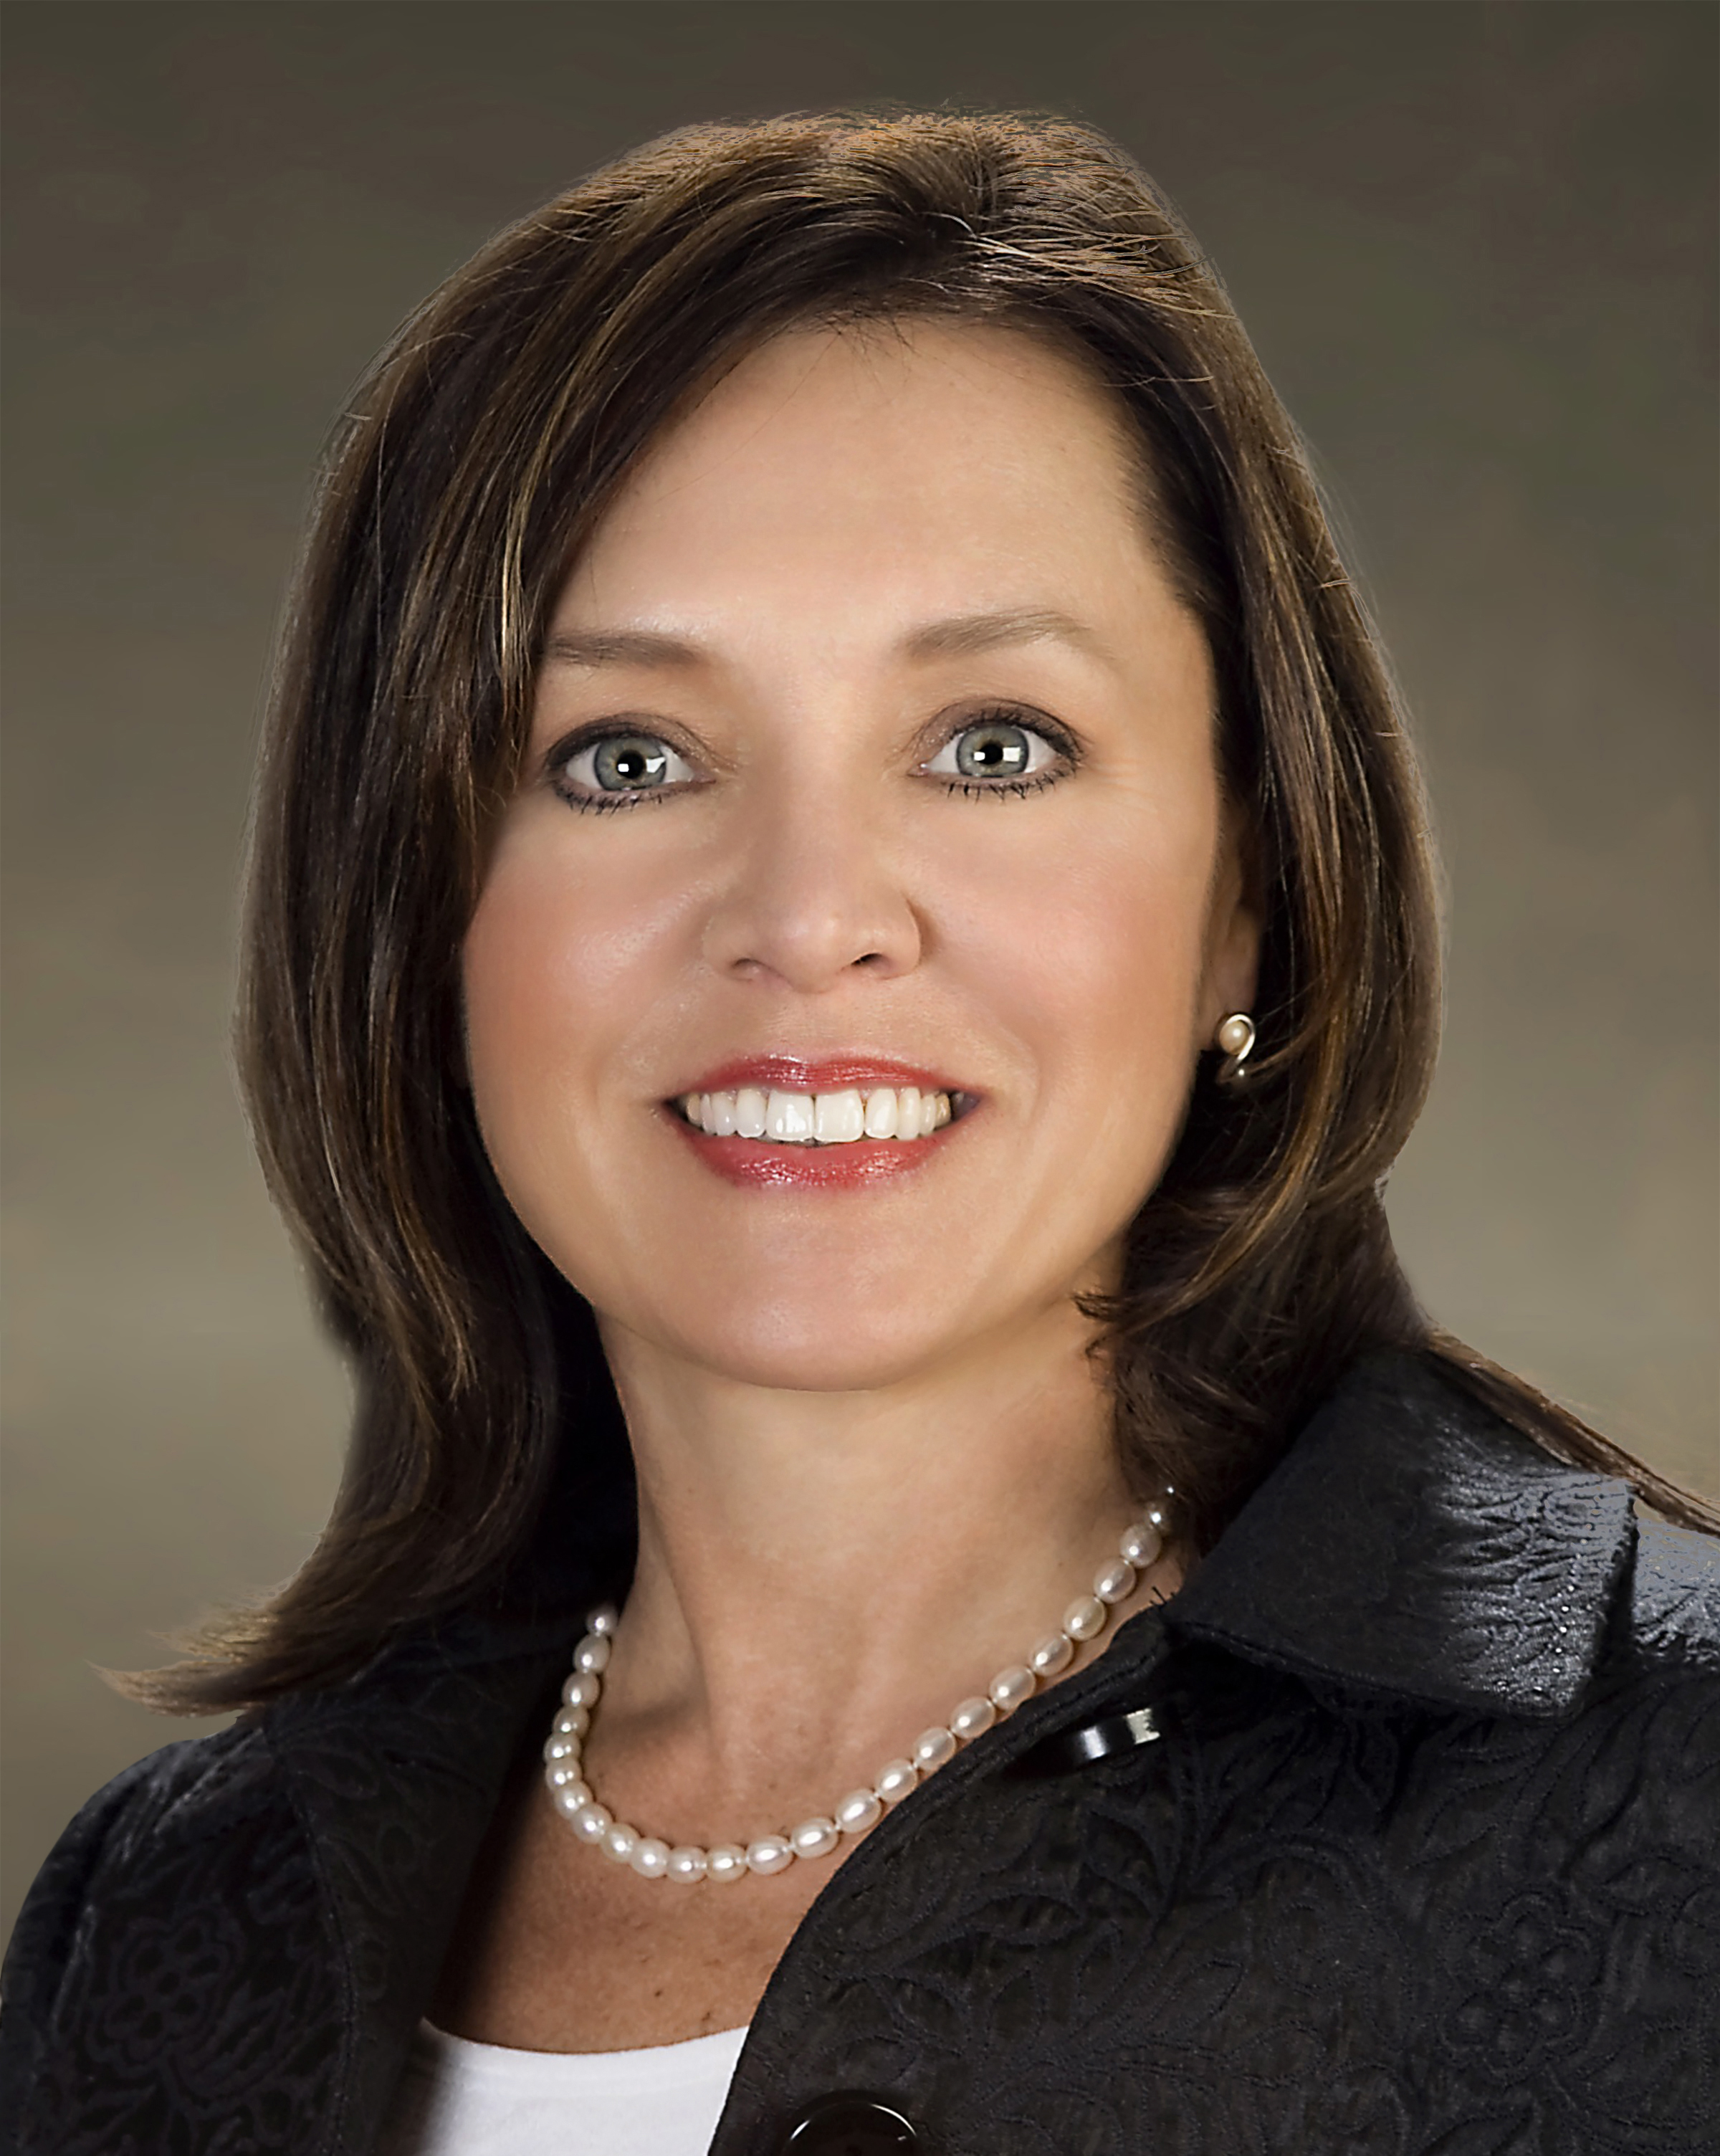 Maureen Tarrant, President and CEO Rocky Mountain Hospital for Children and Presbyterian/St. Luke’s Medical Center.